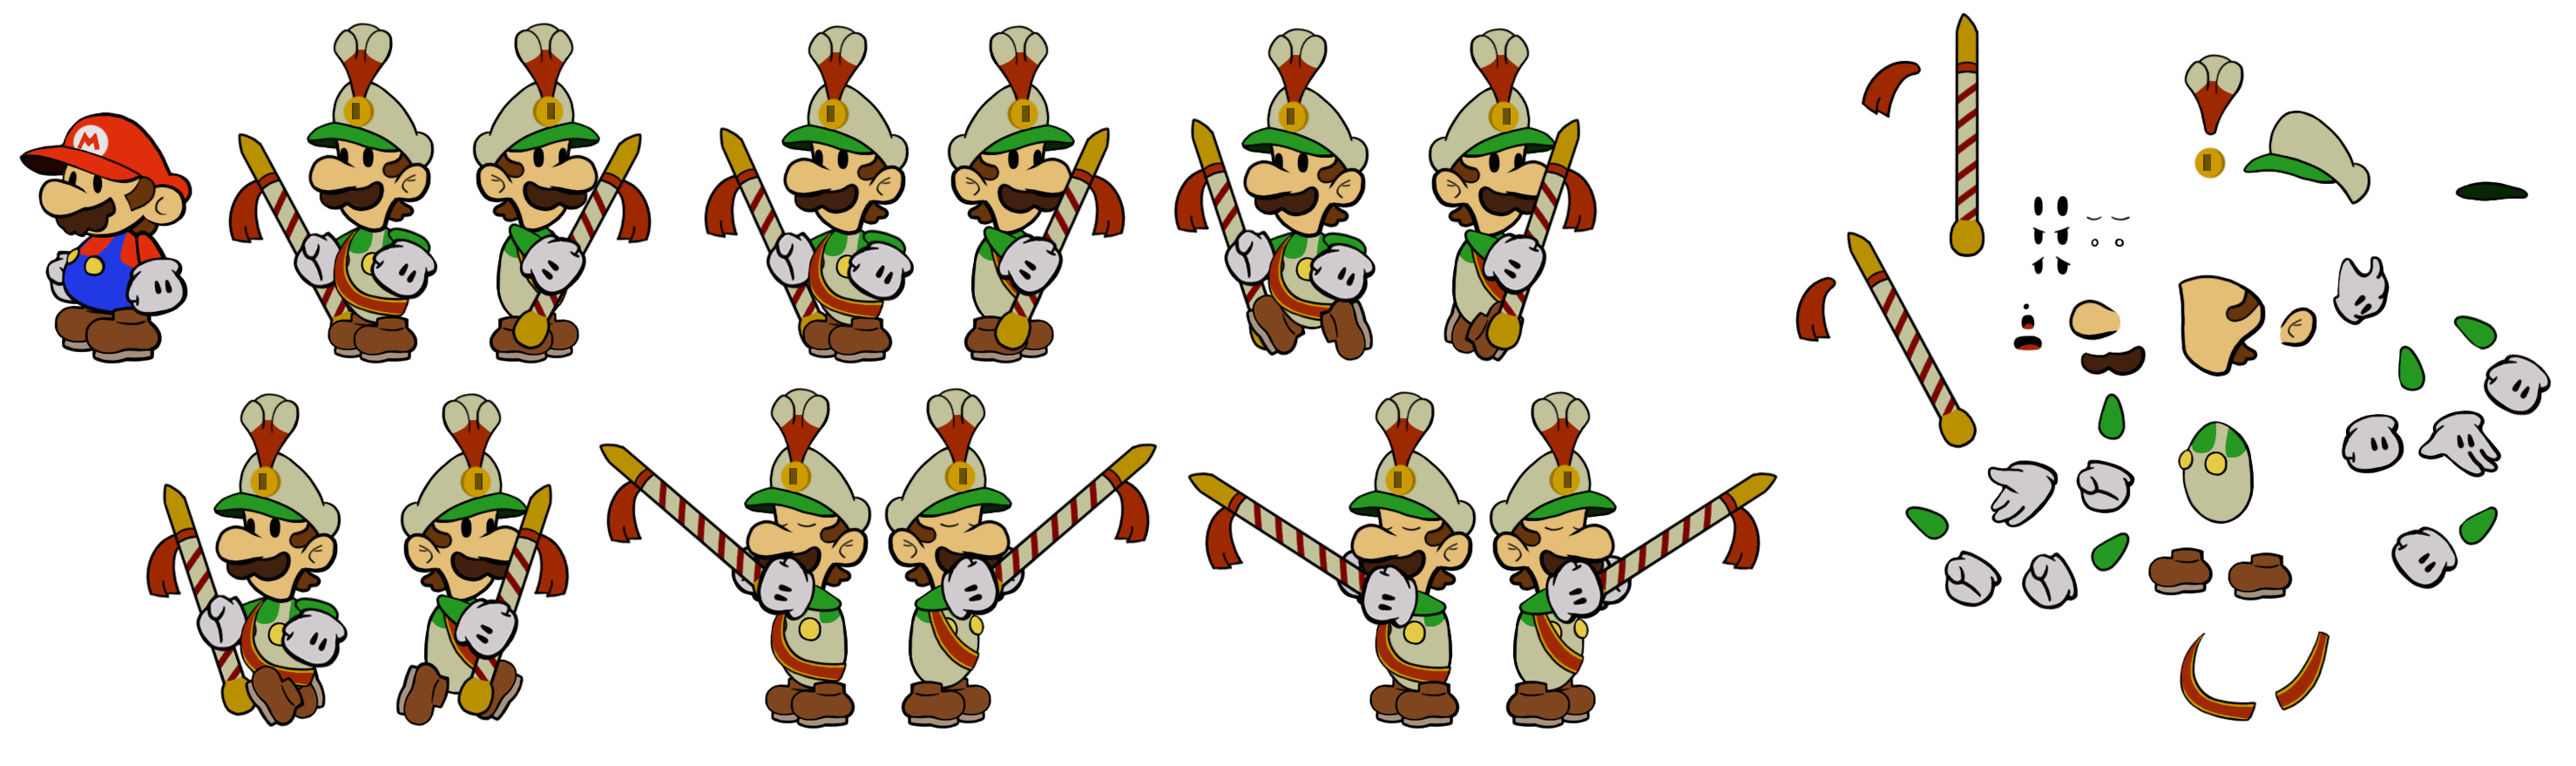 Paper Mario Customs - Luigi (Parade Leader, Paper Mario-Style)